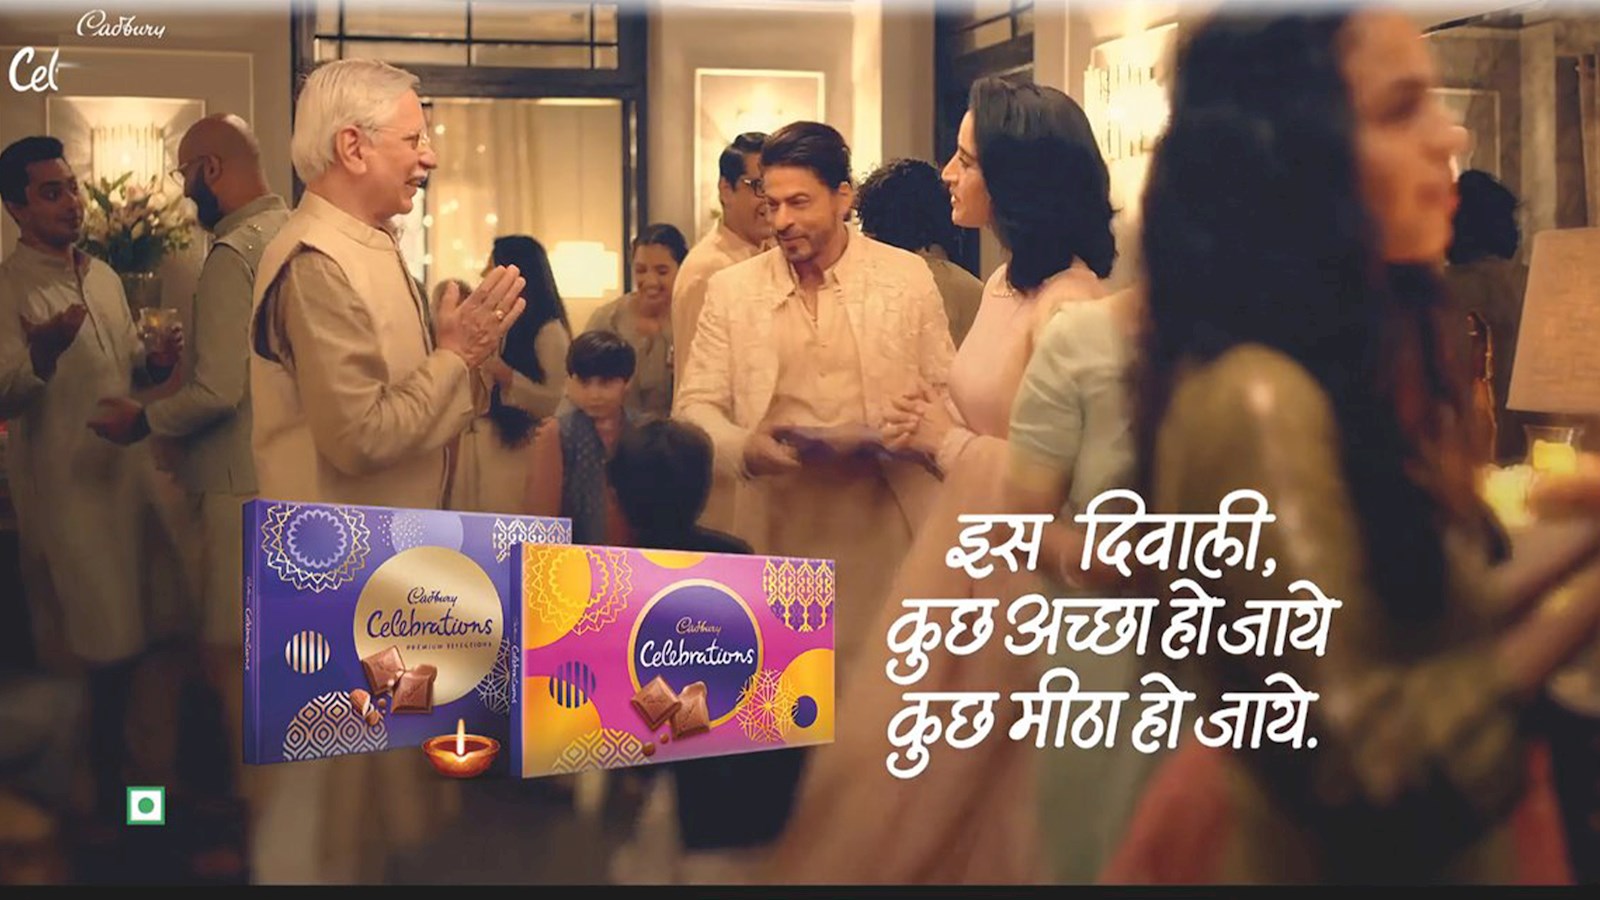 Image showing scene from Cadbury ad